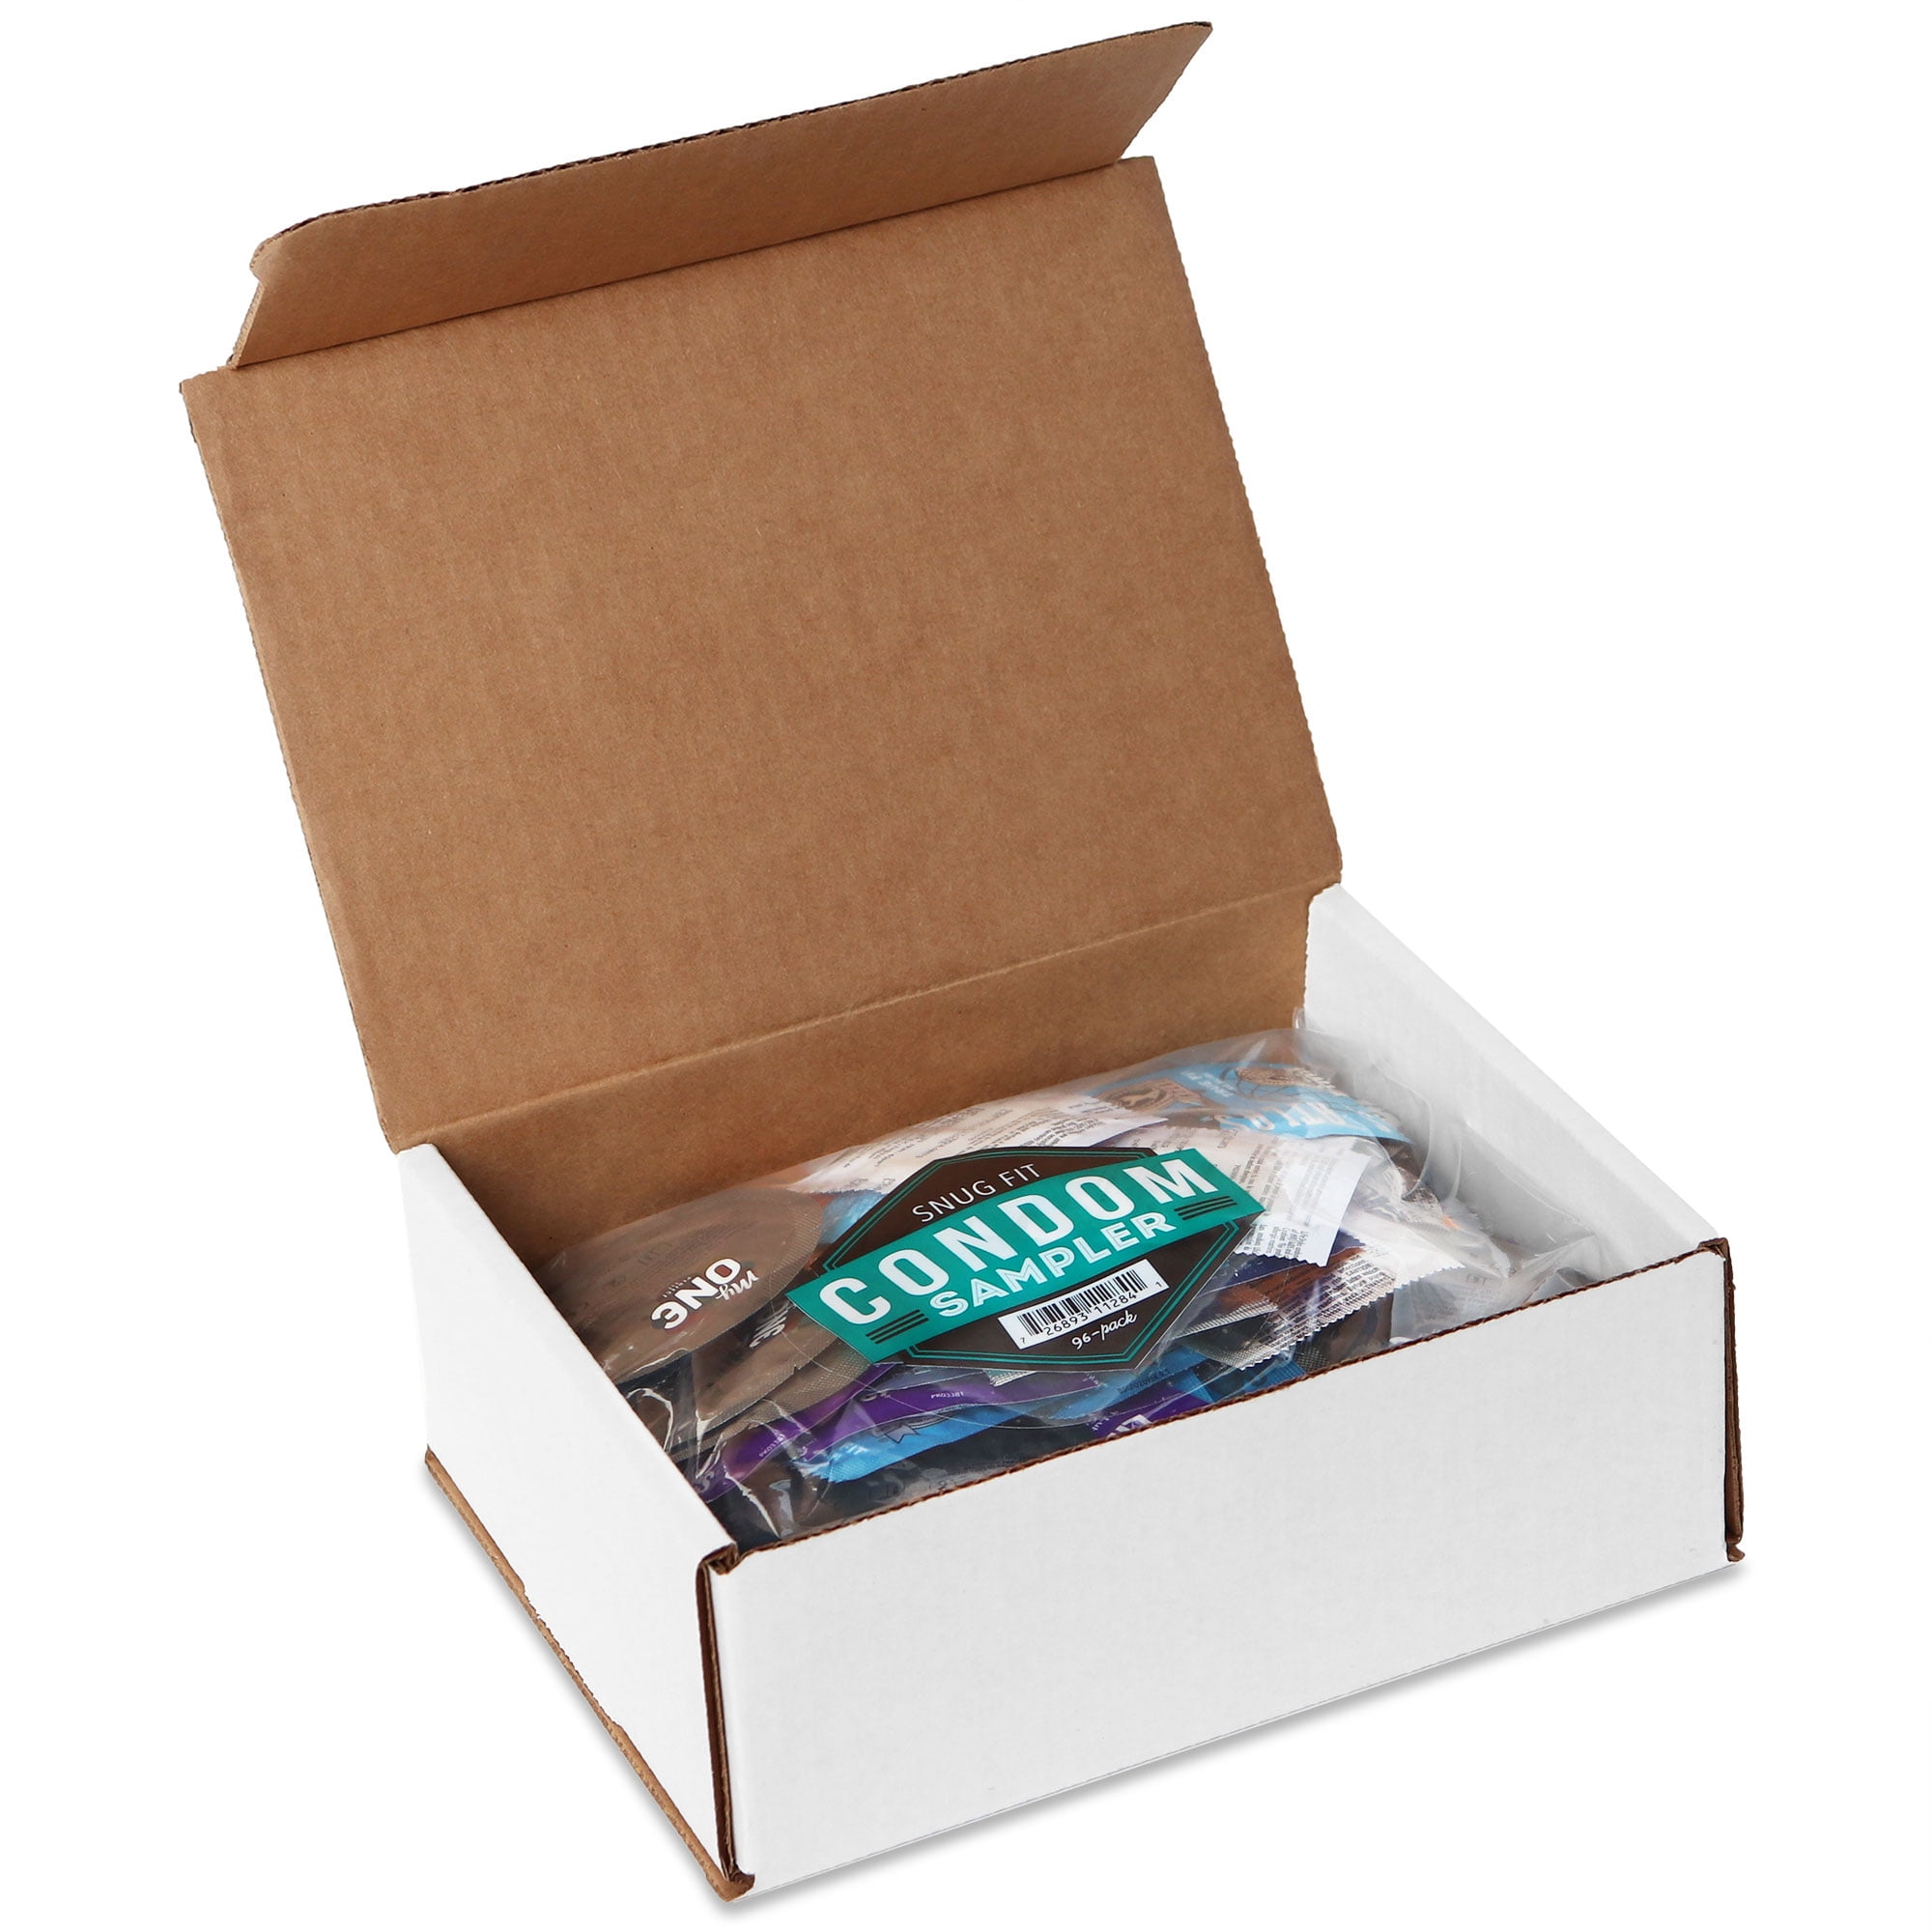 Snug Condom Sampler, 96-Count:  Includes Popular Condom Brands